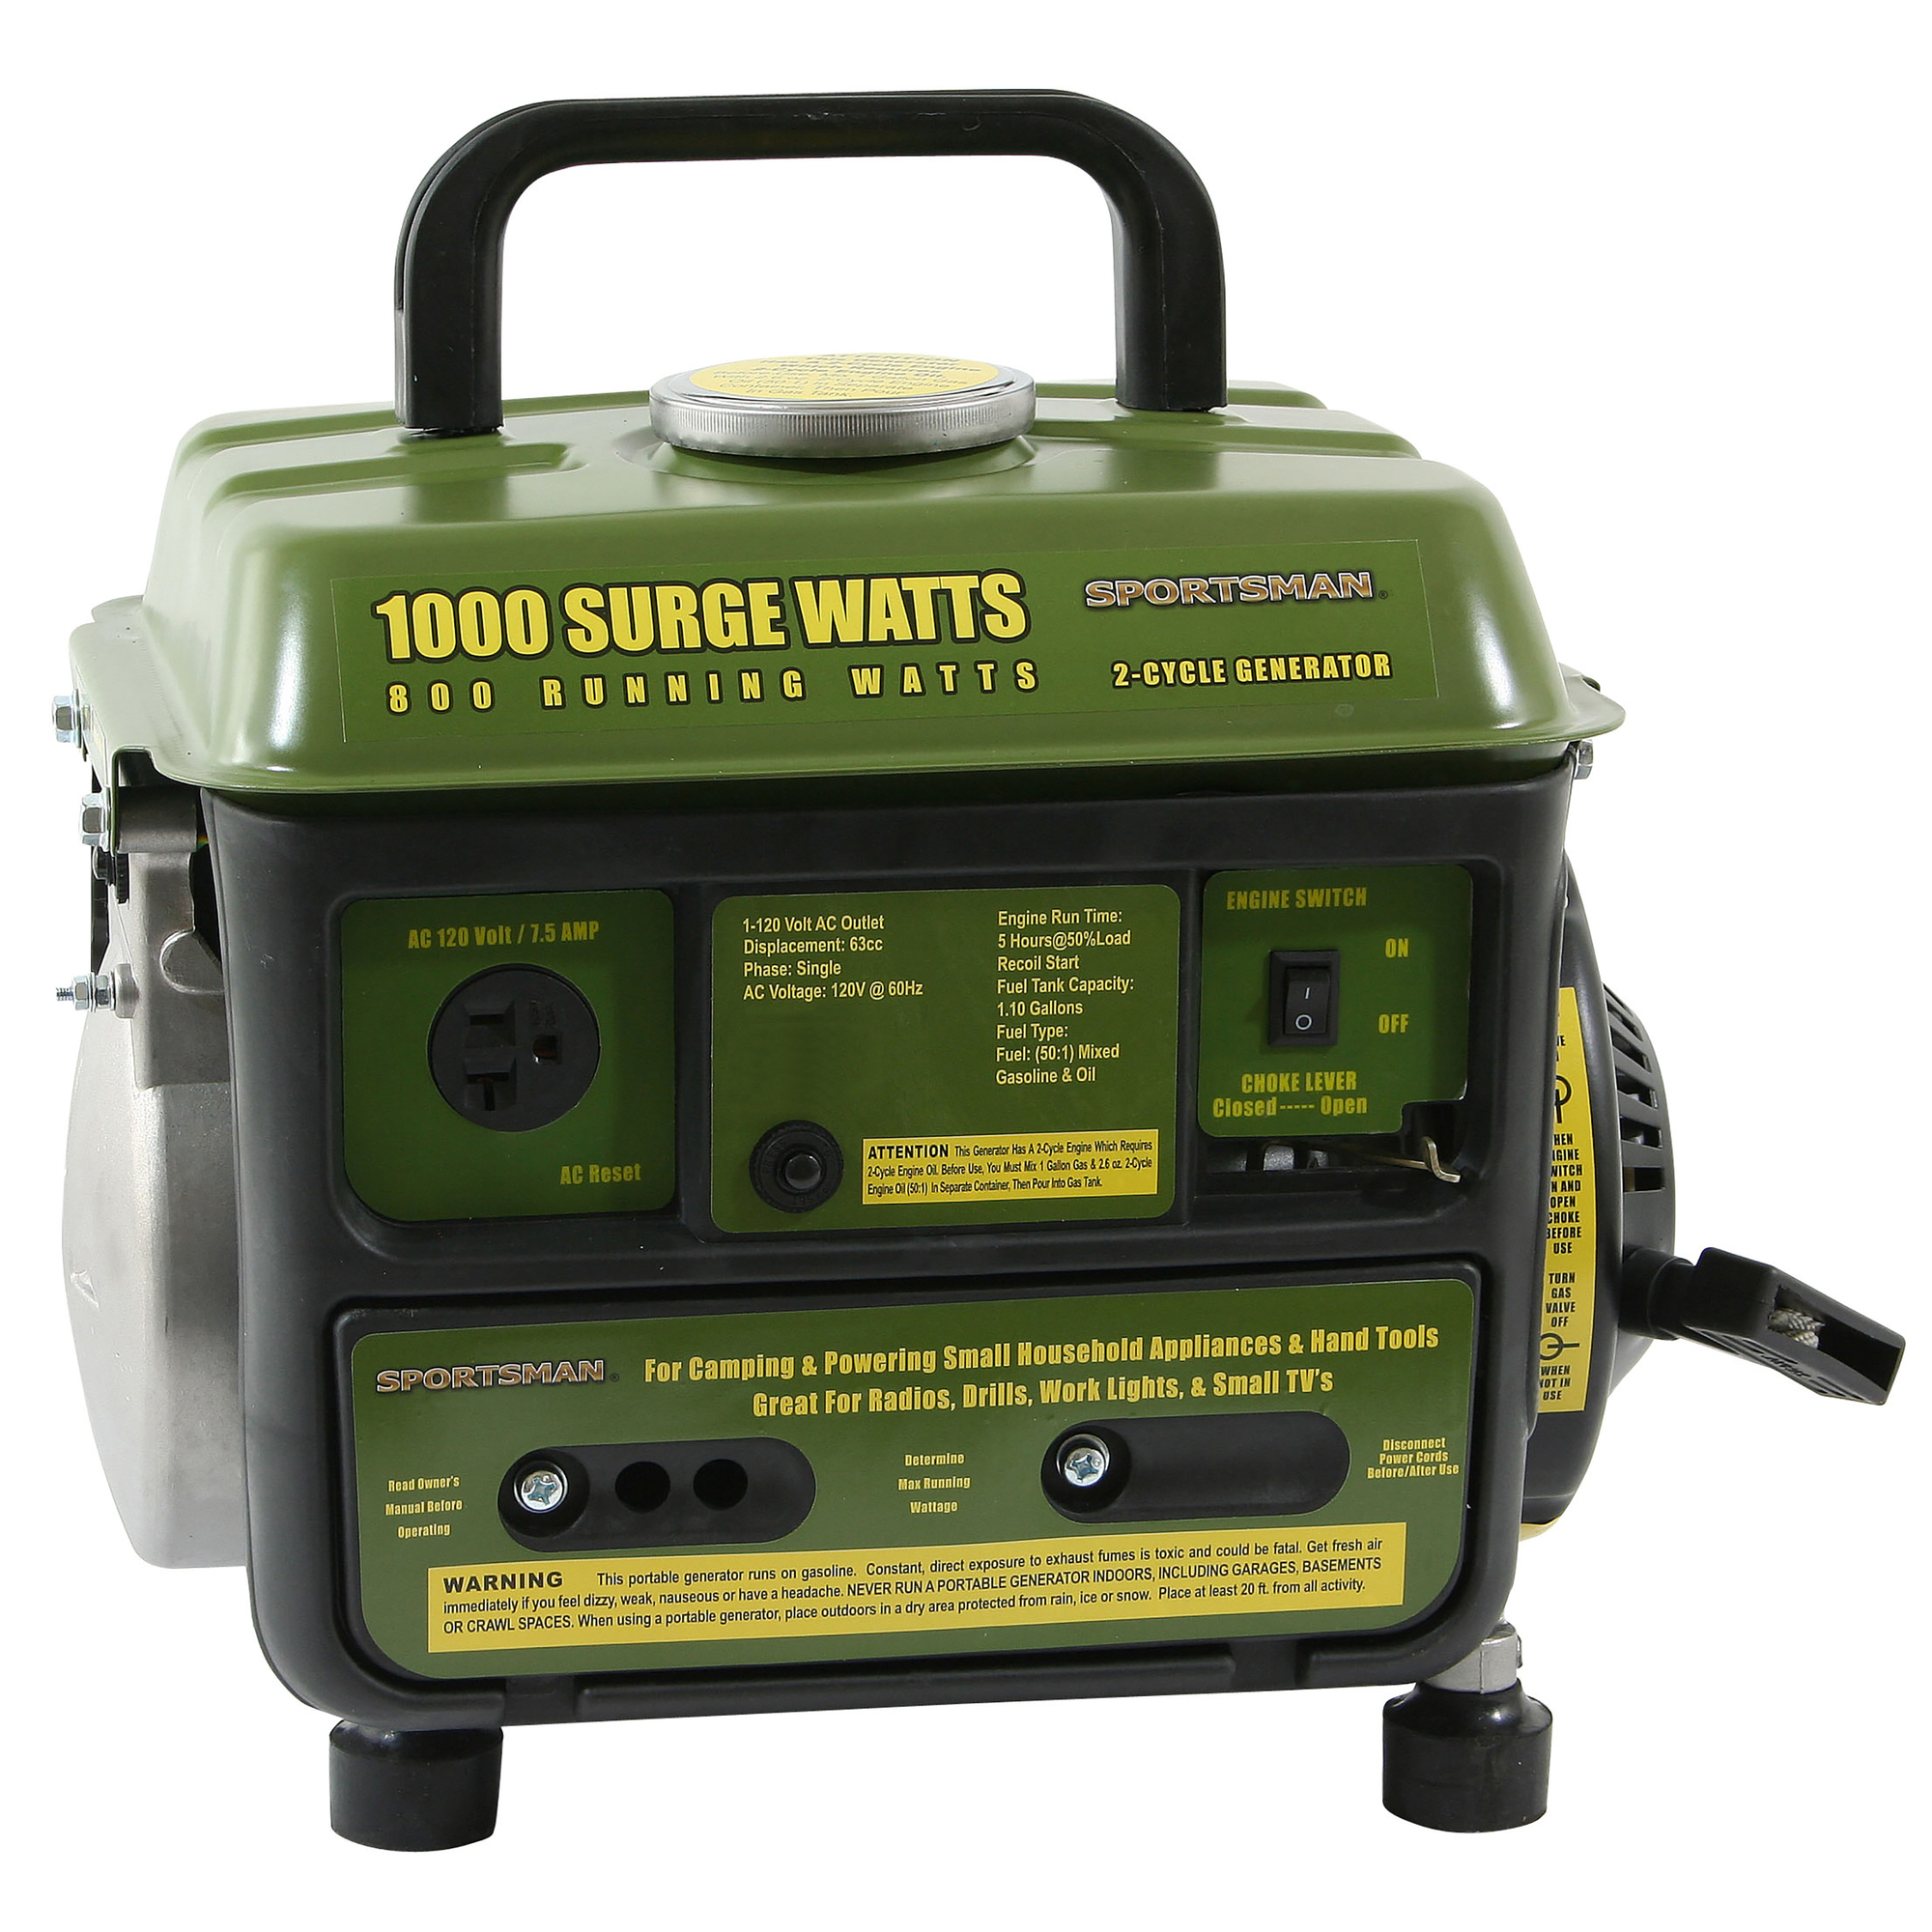 1000 Surge Watts Gasoline Portable Generator, Voltage 120 Model - Sportsman GEN1000